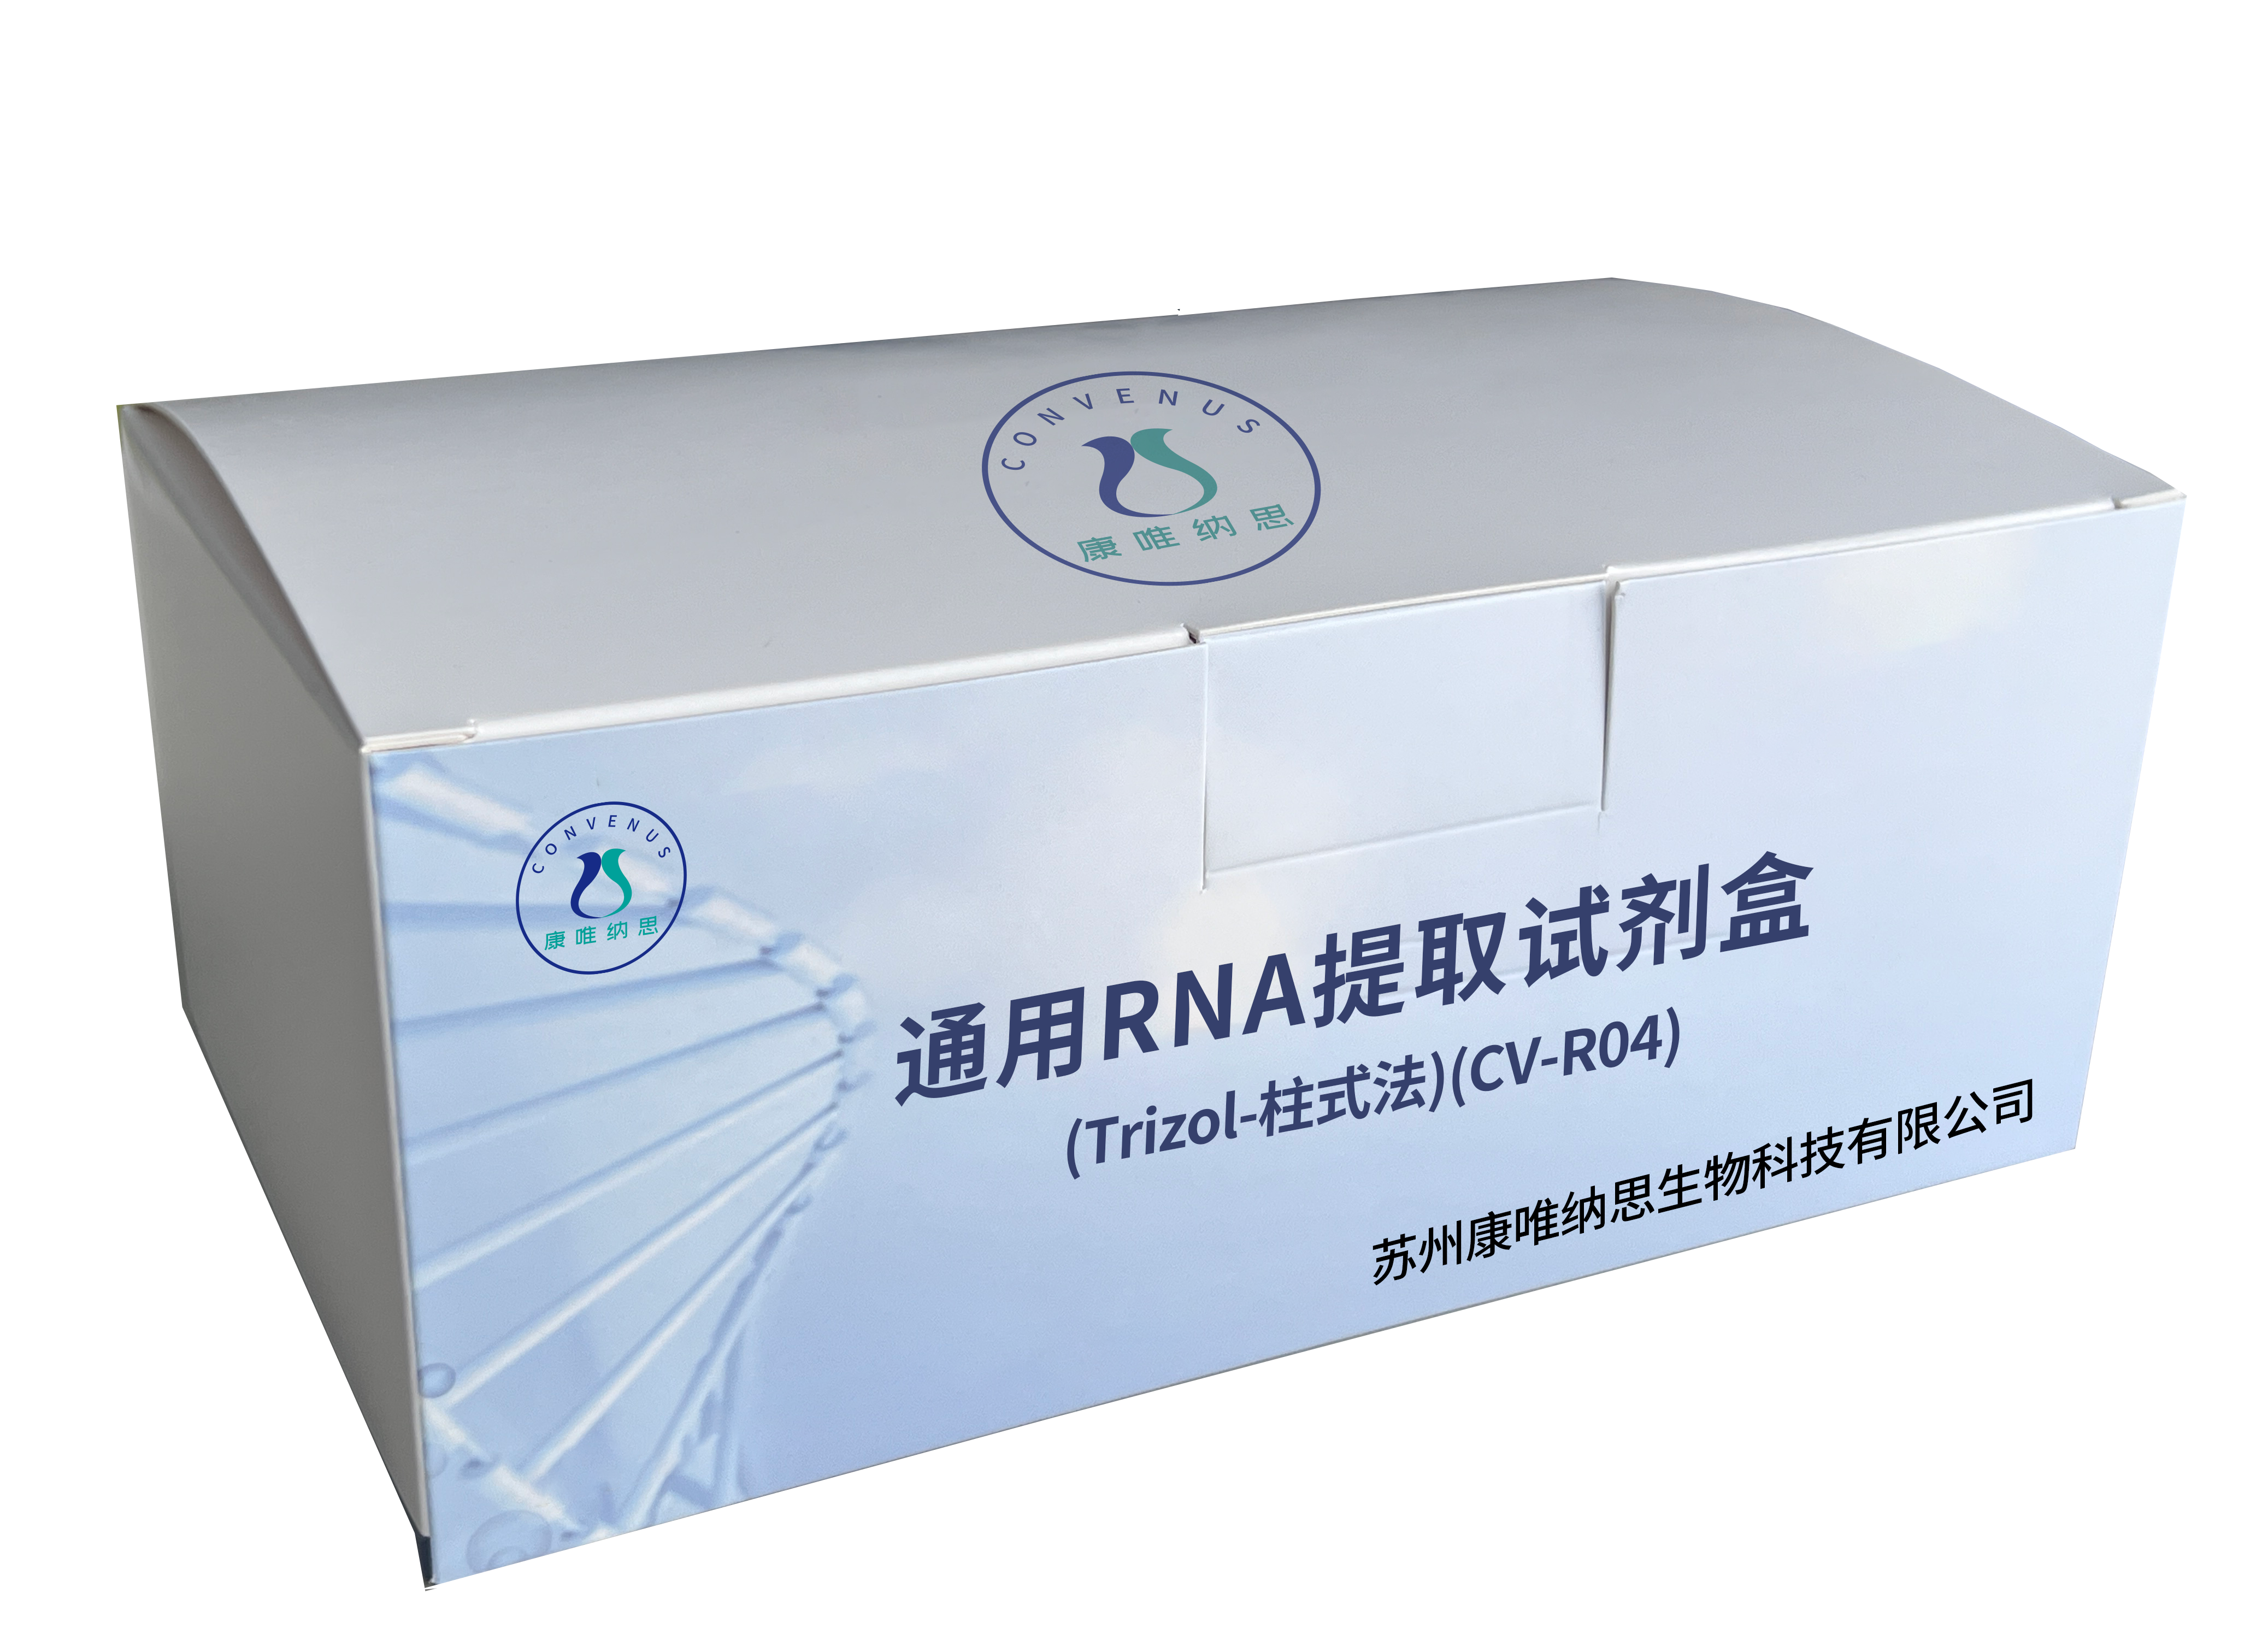 通用RNA提取试剂盒(Trizol-柱式法)(CV-R04)